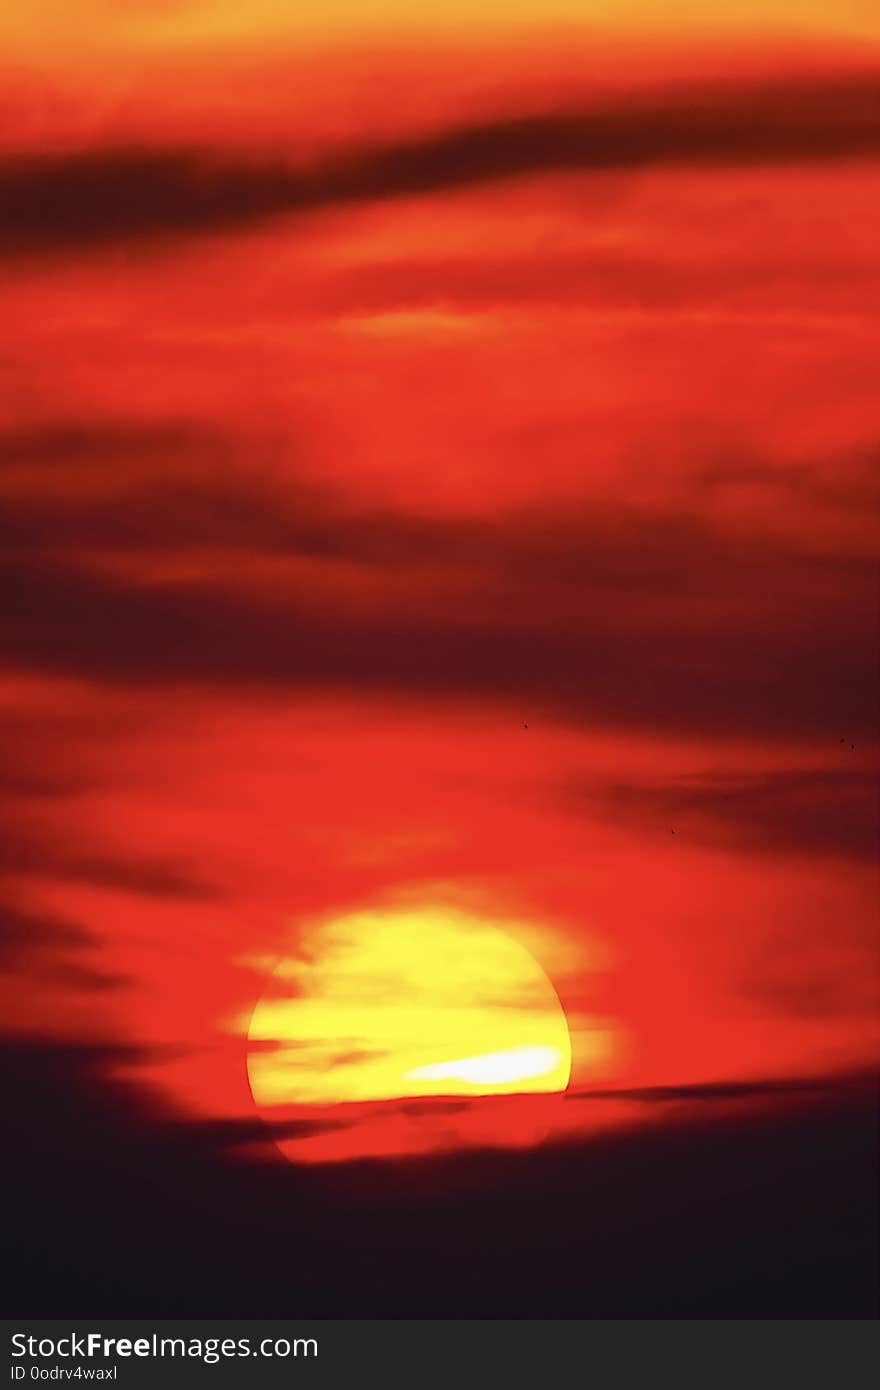 Big sun sunset sky orange sky red sunright outdoor summer nature landscape backgound